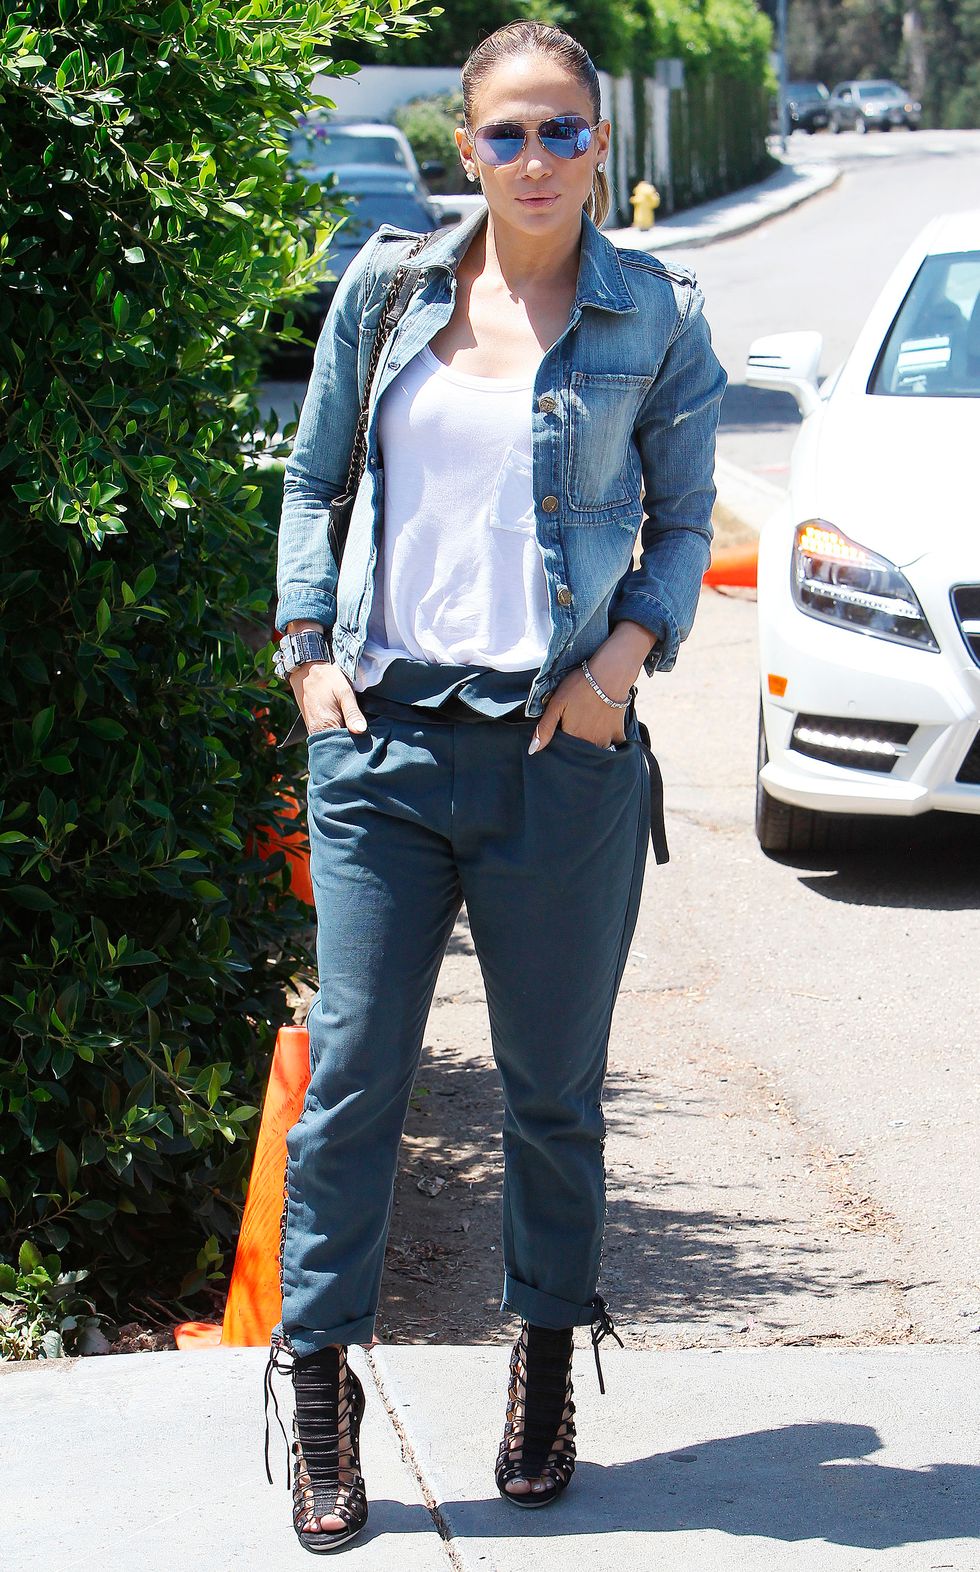 Jennifer Lopez wearing a denim jacket at a party - celebrity style photos - fashion - cosmopolitan.co.uk